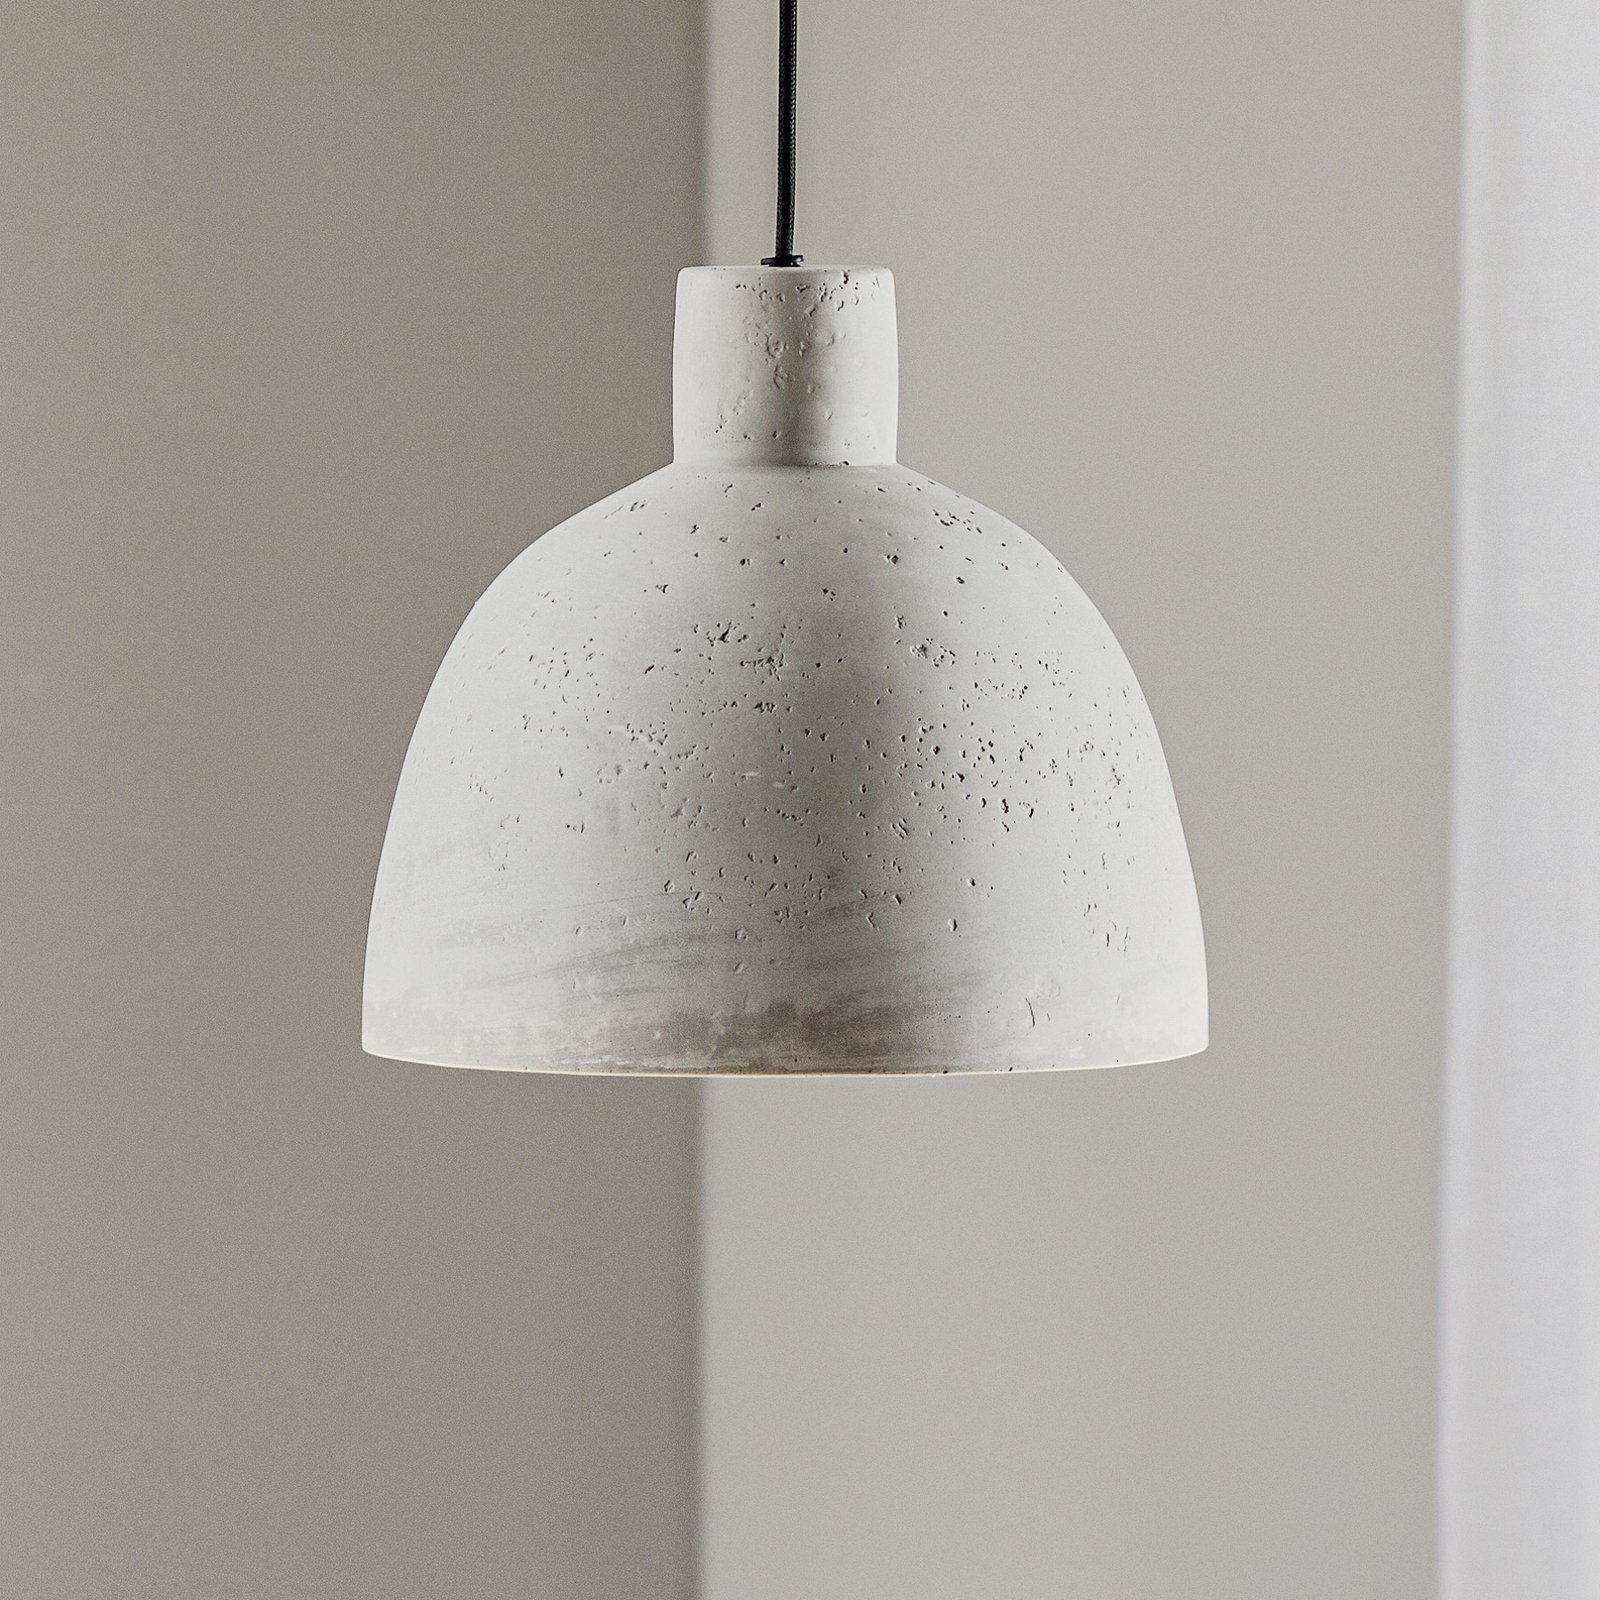 Lampa wisząca Cona z betonu, Ø 28 cm